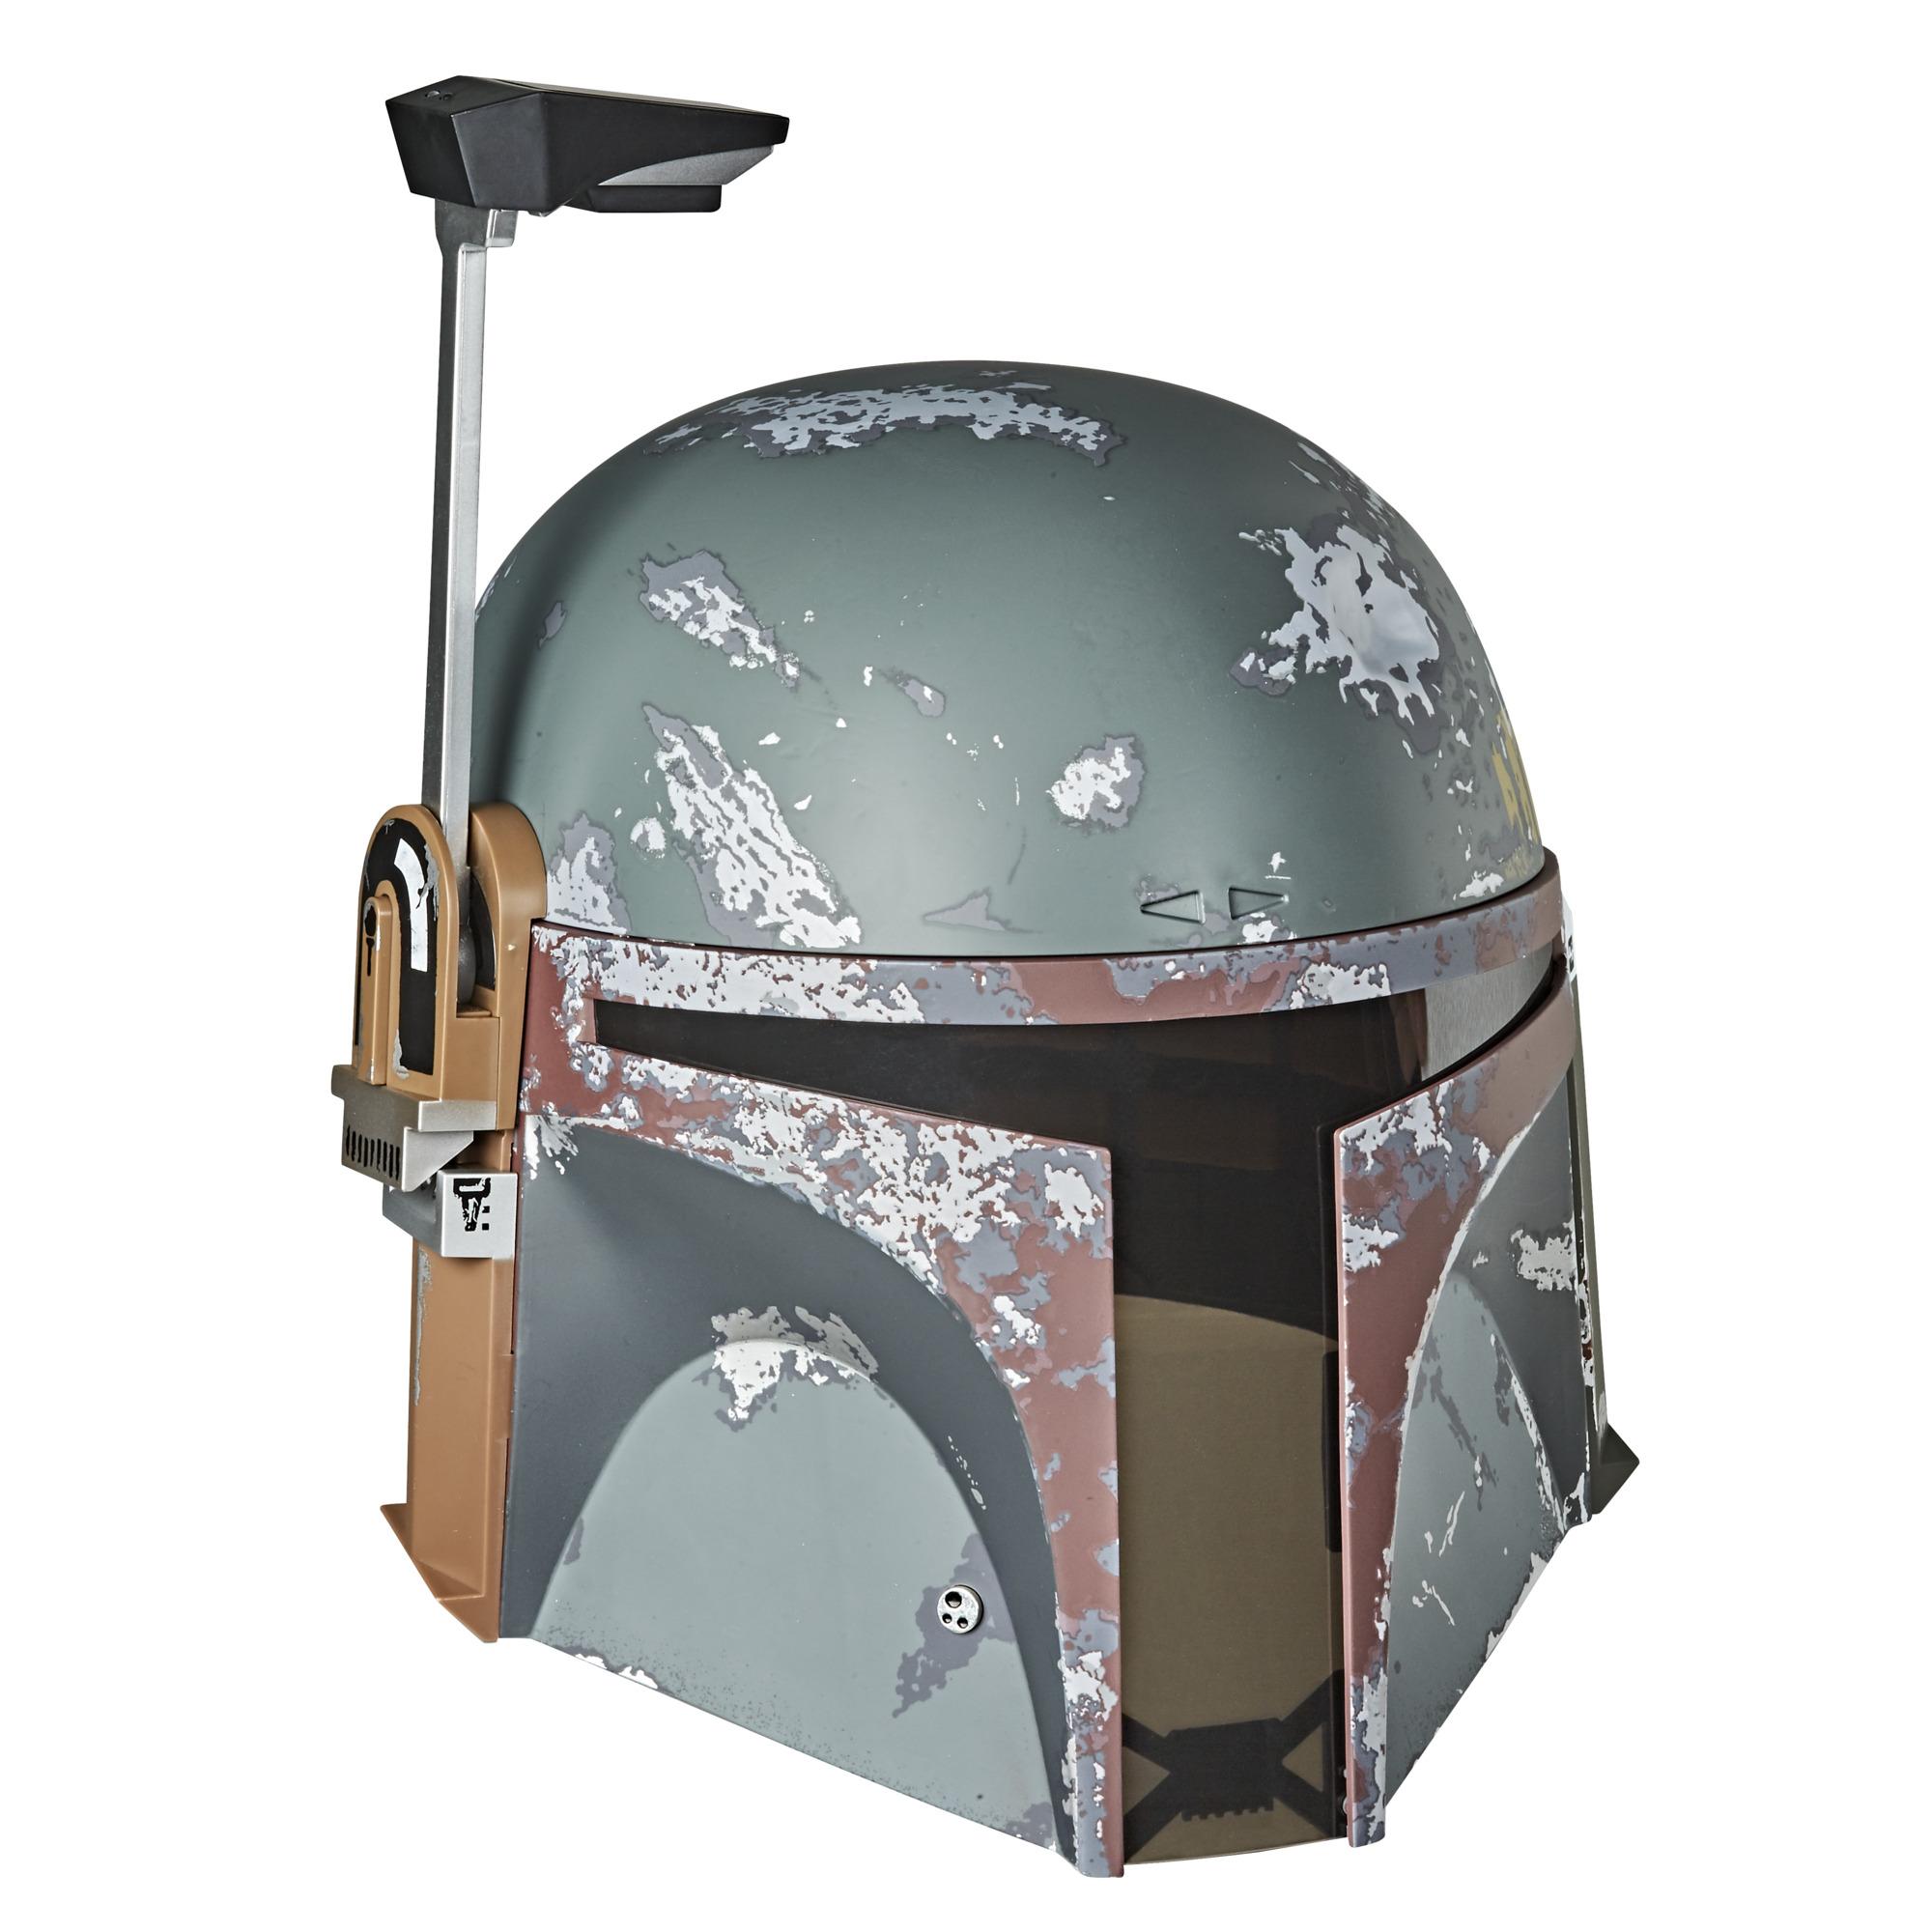 Star Wars The Black Series Boba Fett Premium Electronic Helmet, Star Wars: The Empire Strikes Back Roleplay Helmet